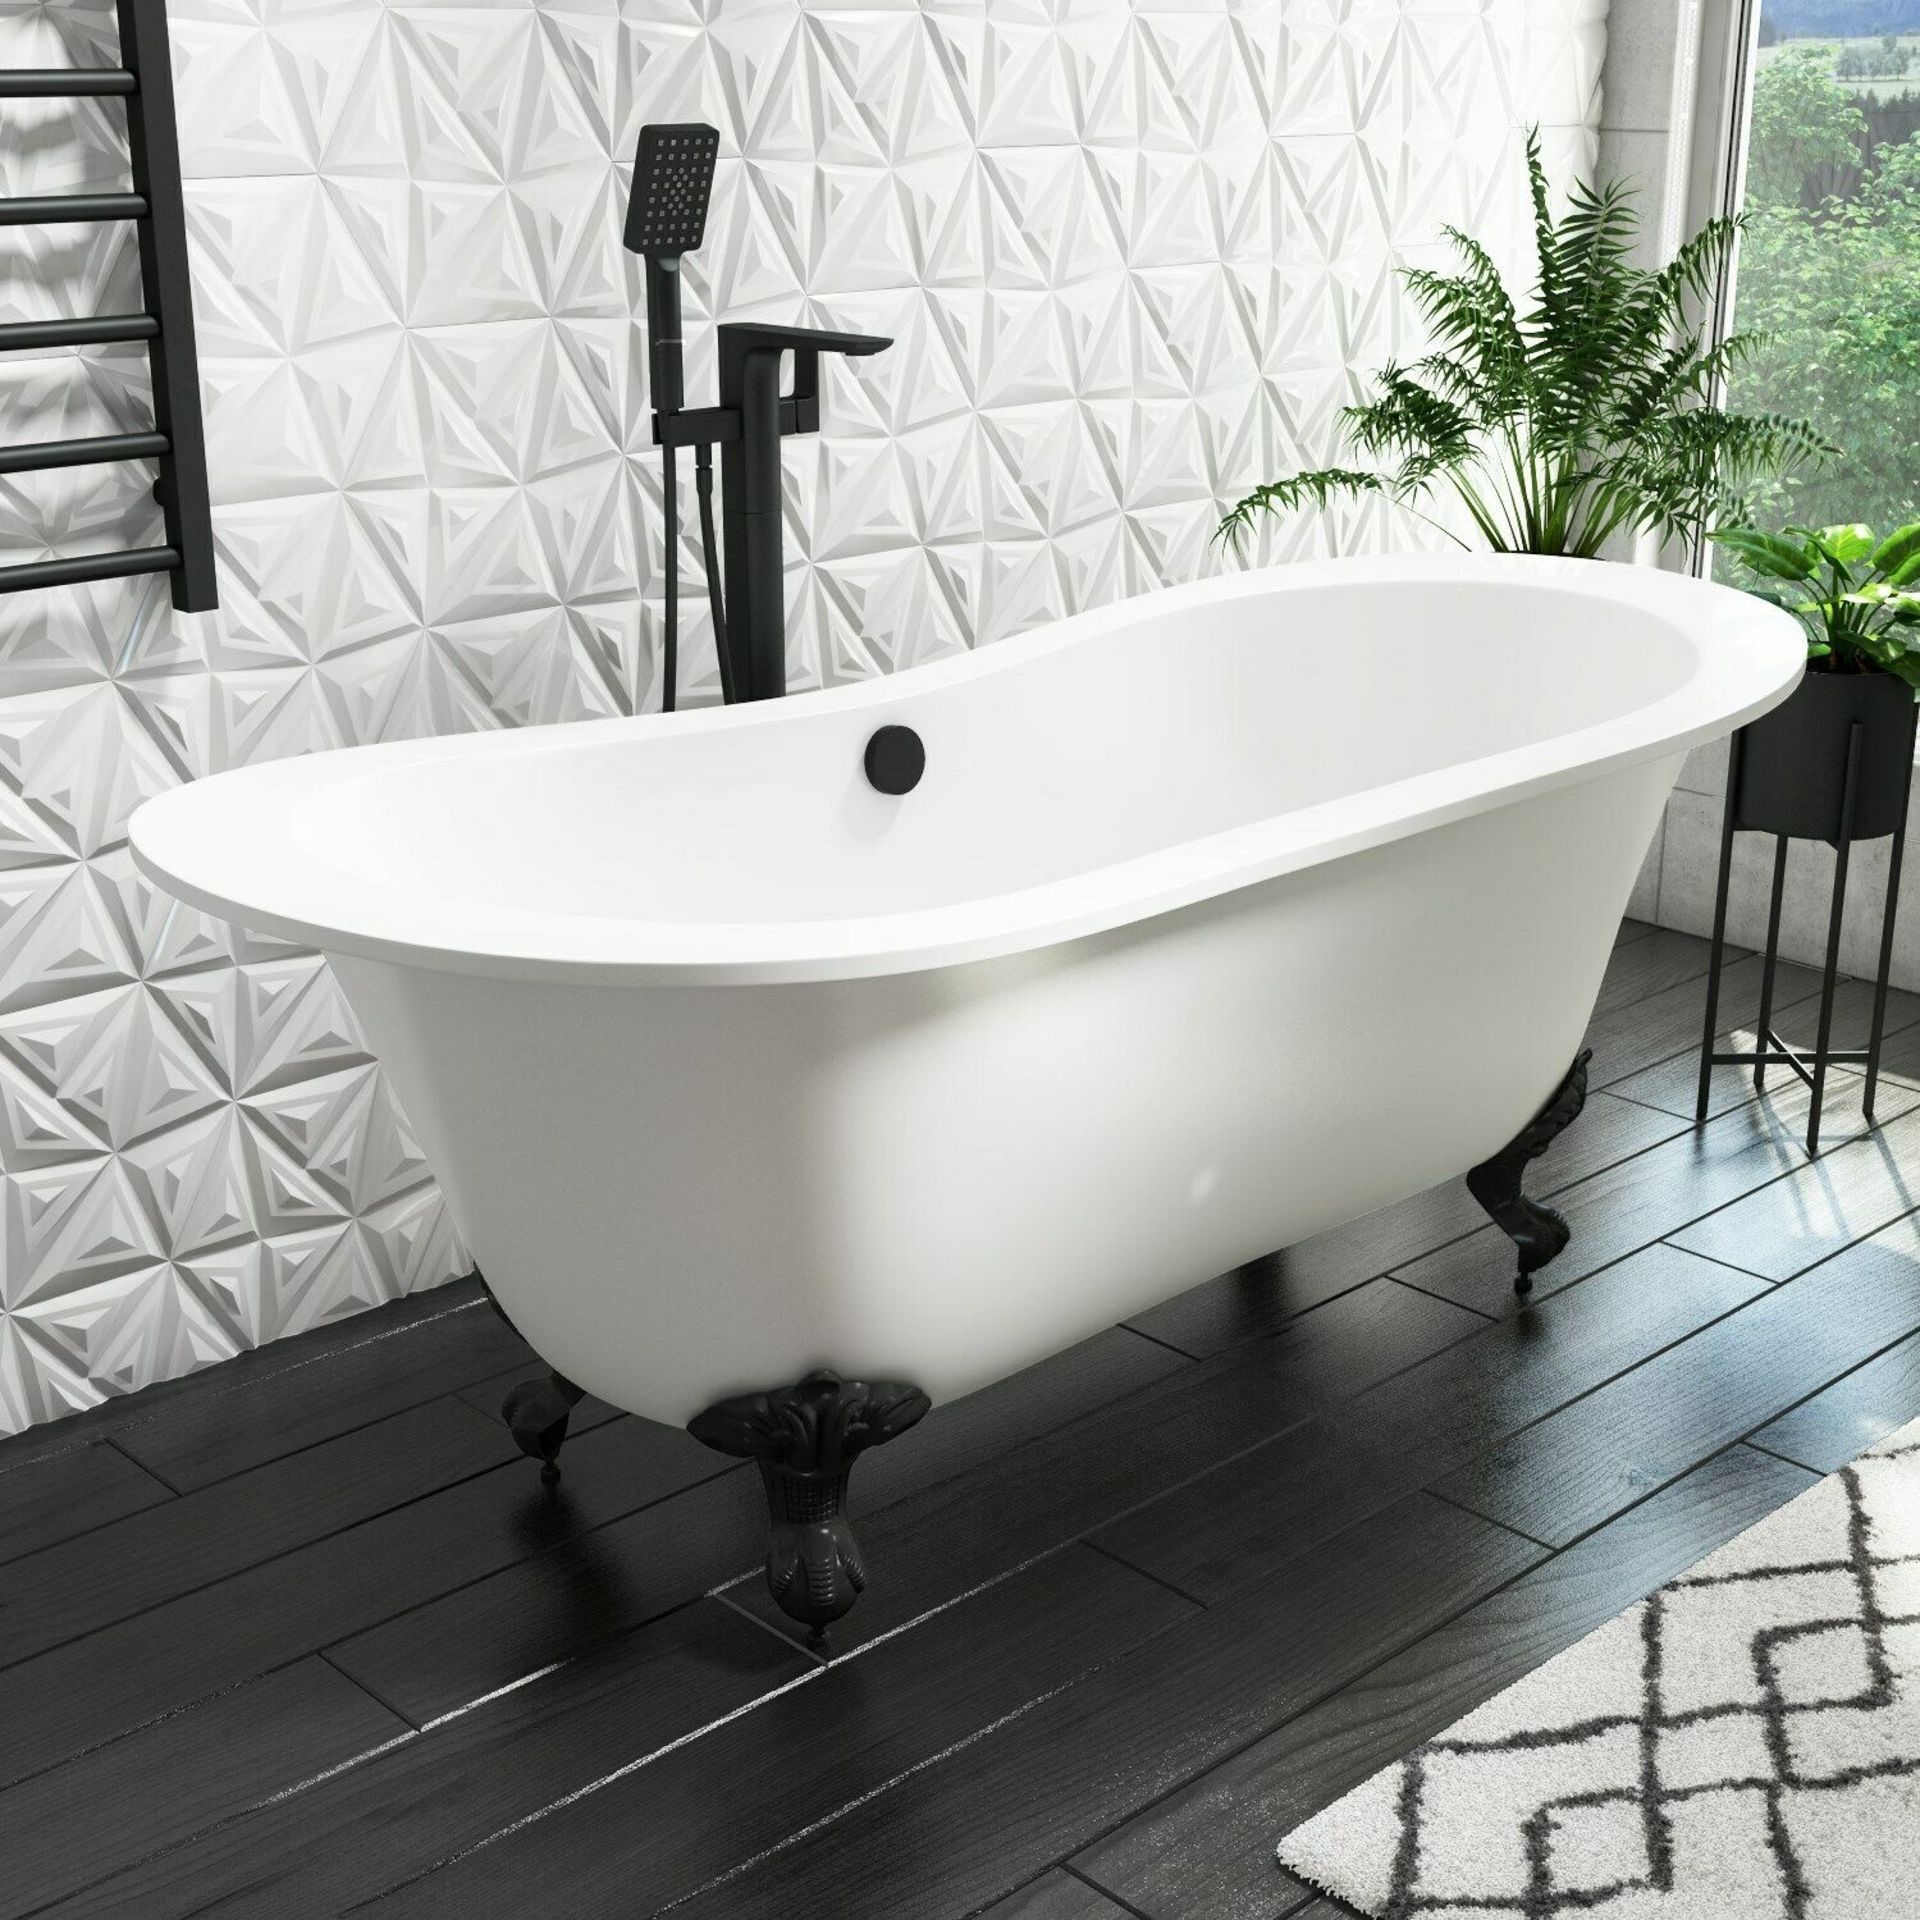 NEW & BOXED Black Canim Freestanding Bath Mixer Tap & Handheld Shower Head. TB3086B. Construc... - Image 3 of 5